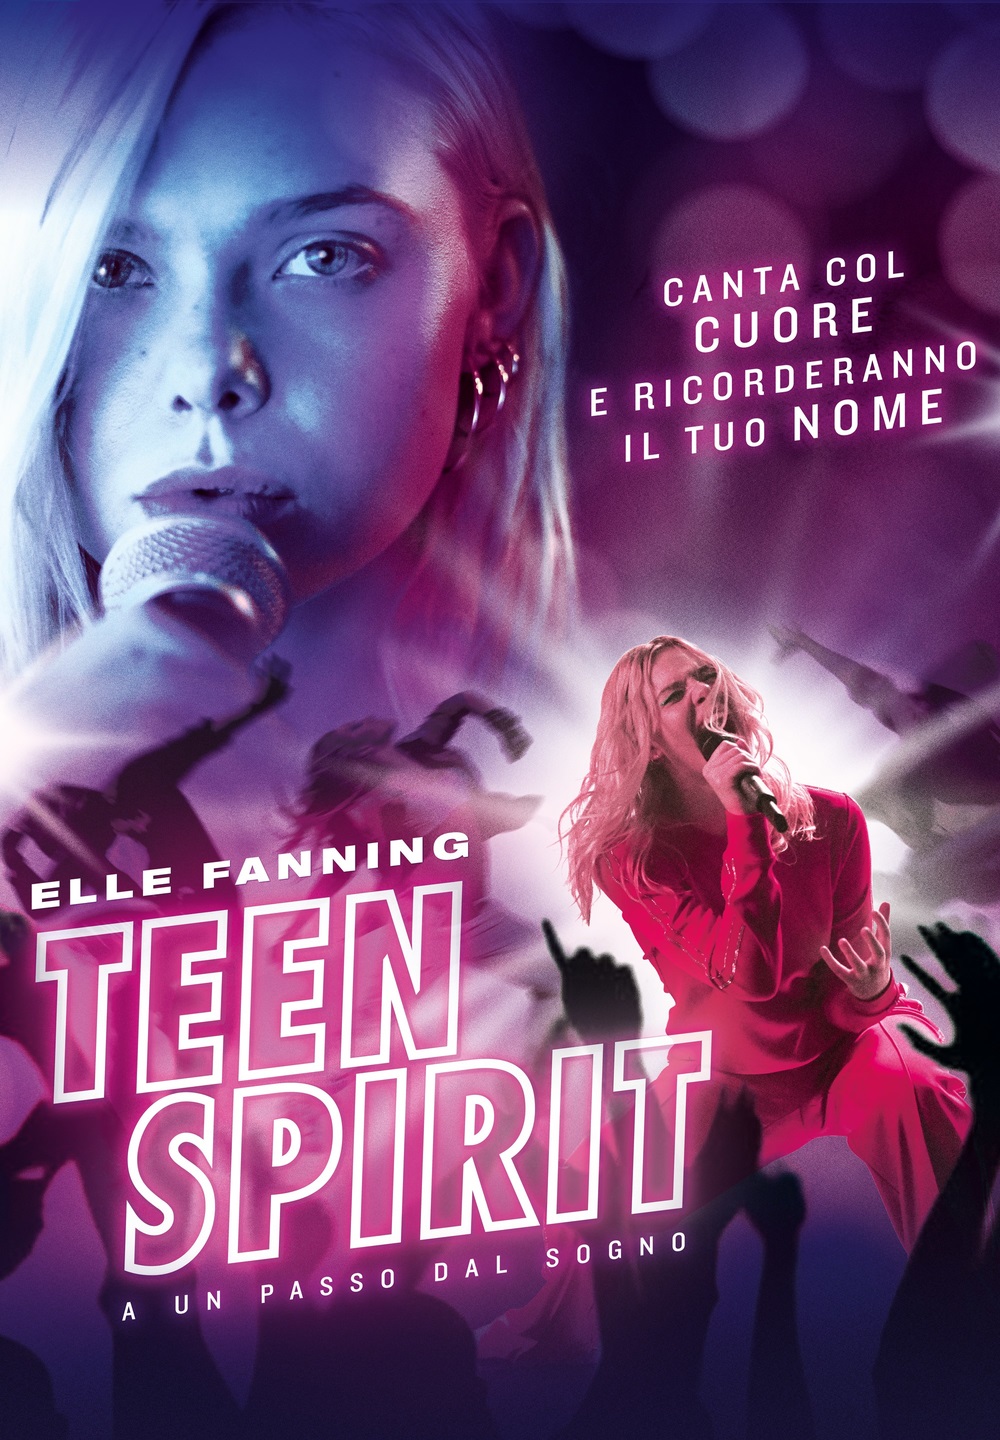 Teen Spirit – A un passo dal sogno [HD] (2019)